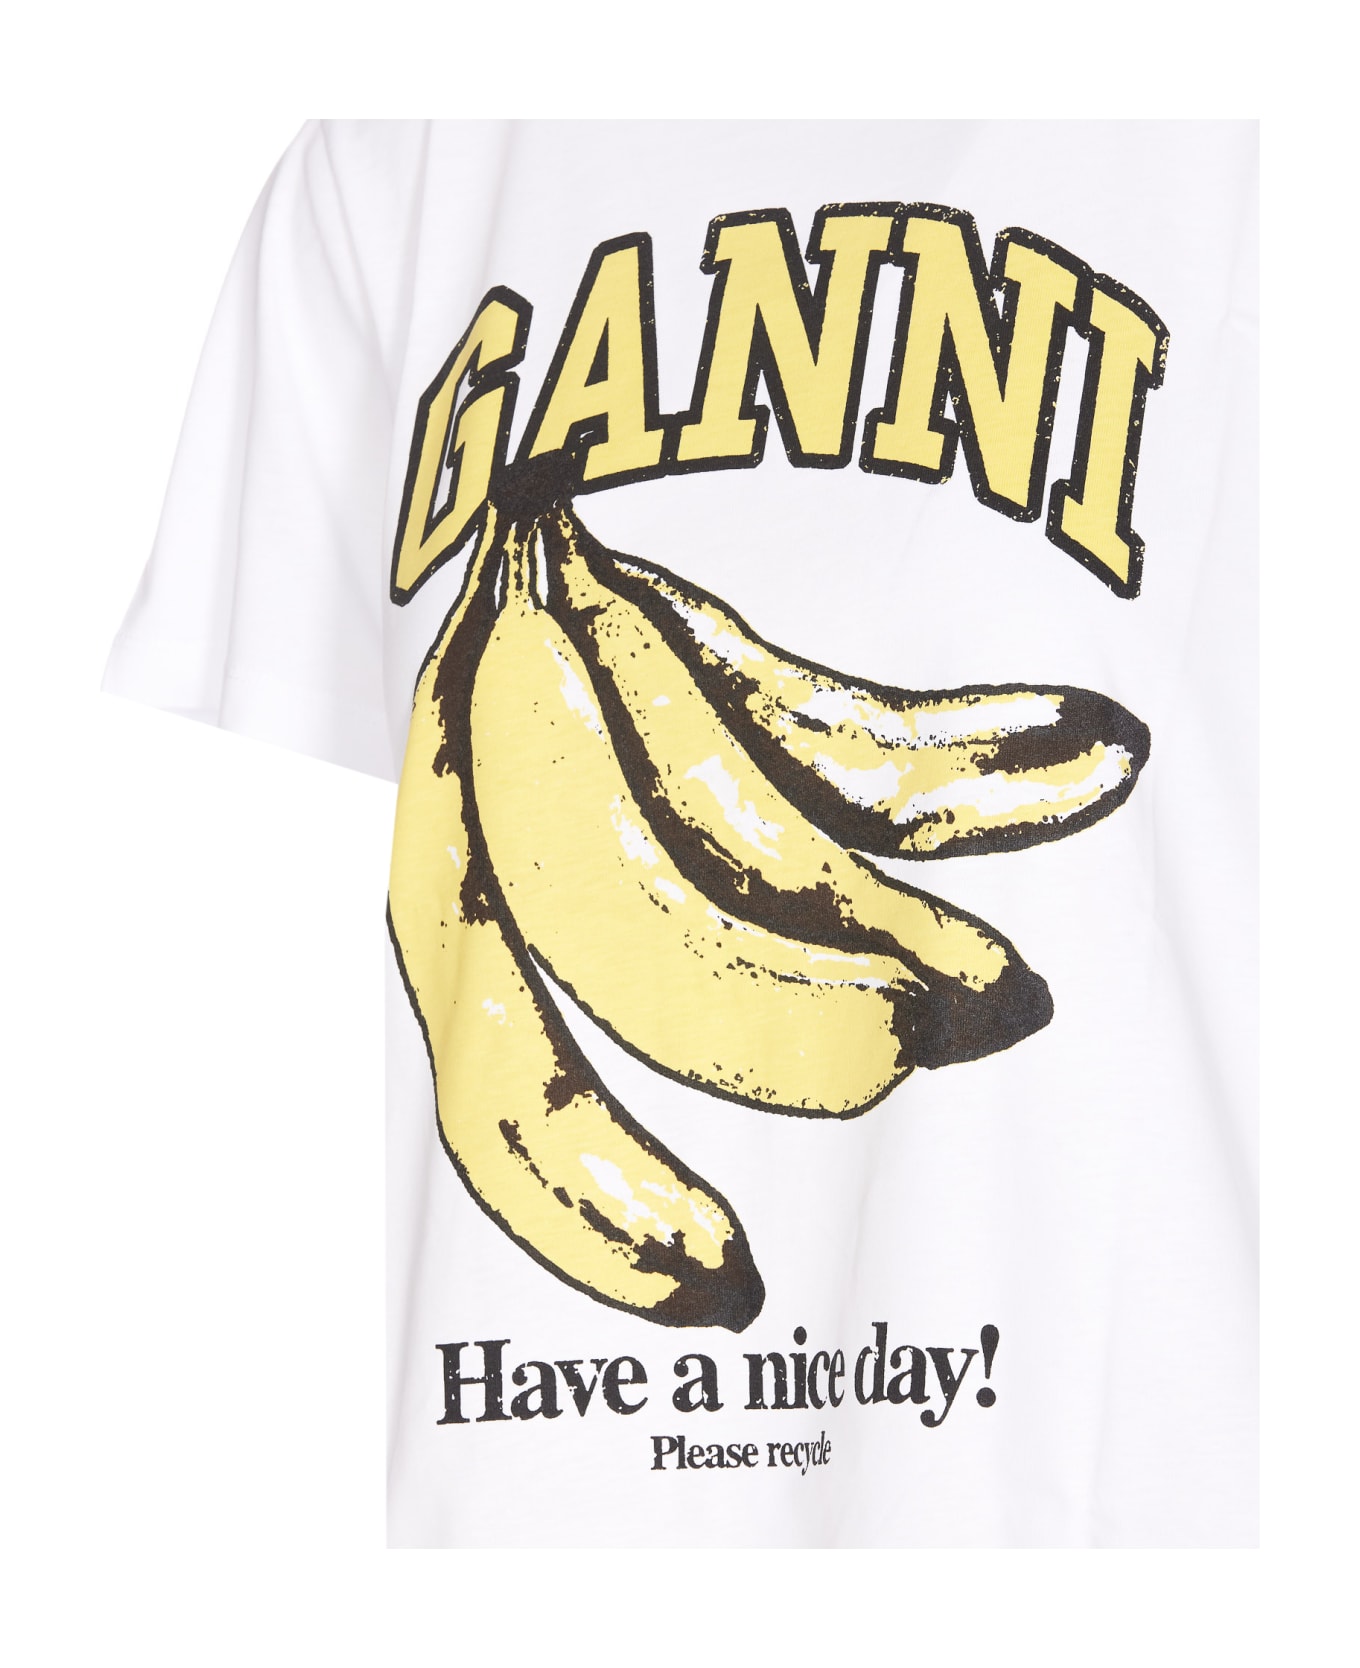 Ganni Banana T-shirt - White